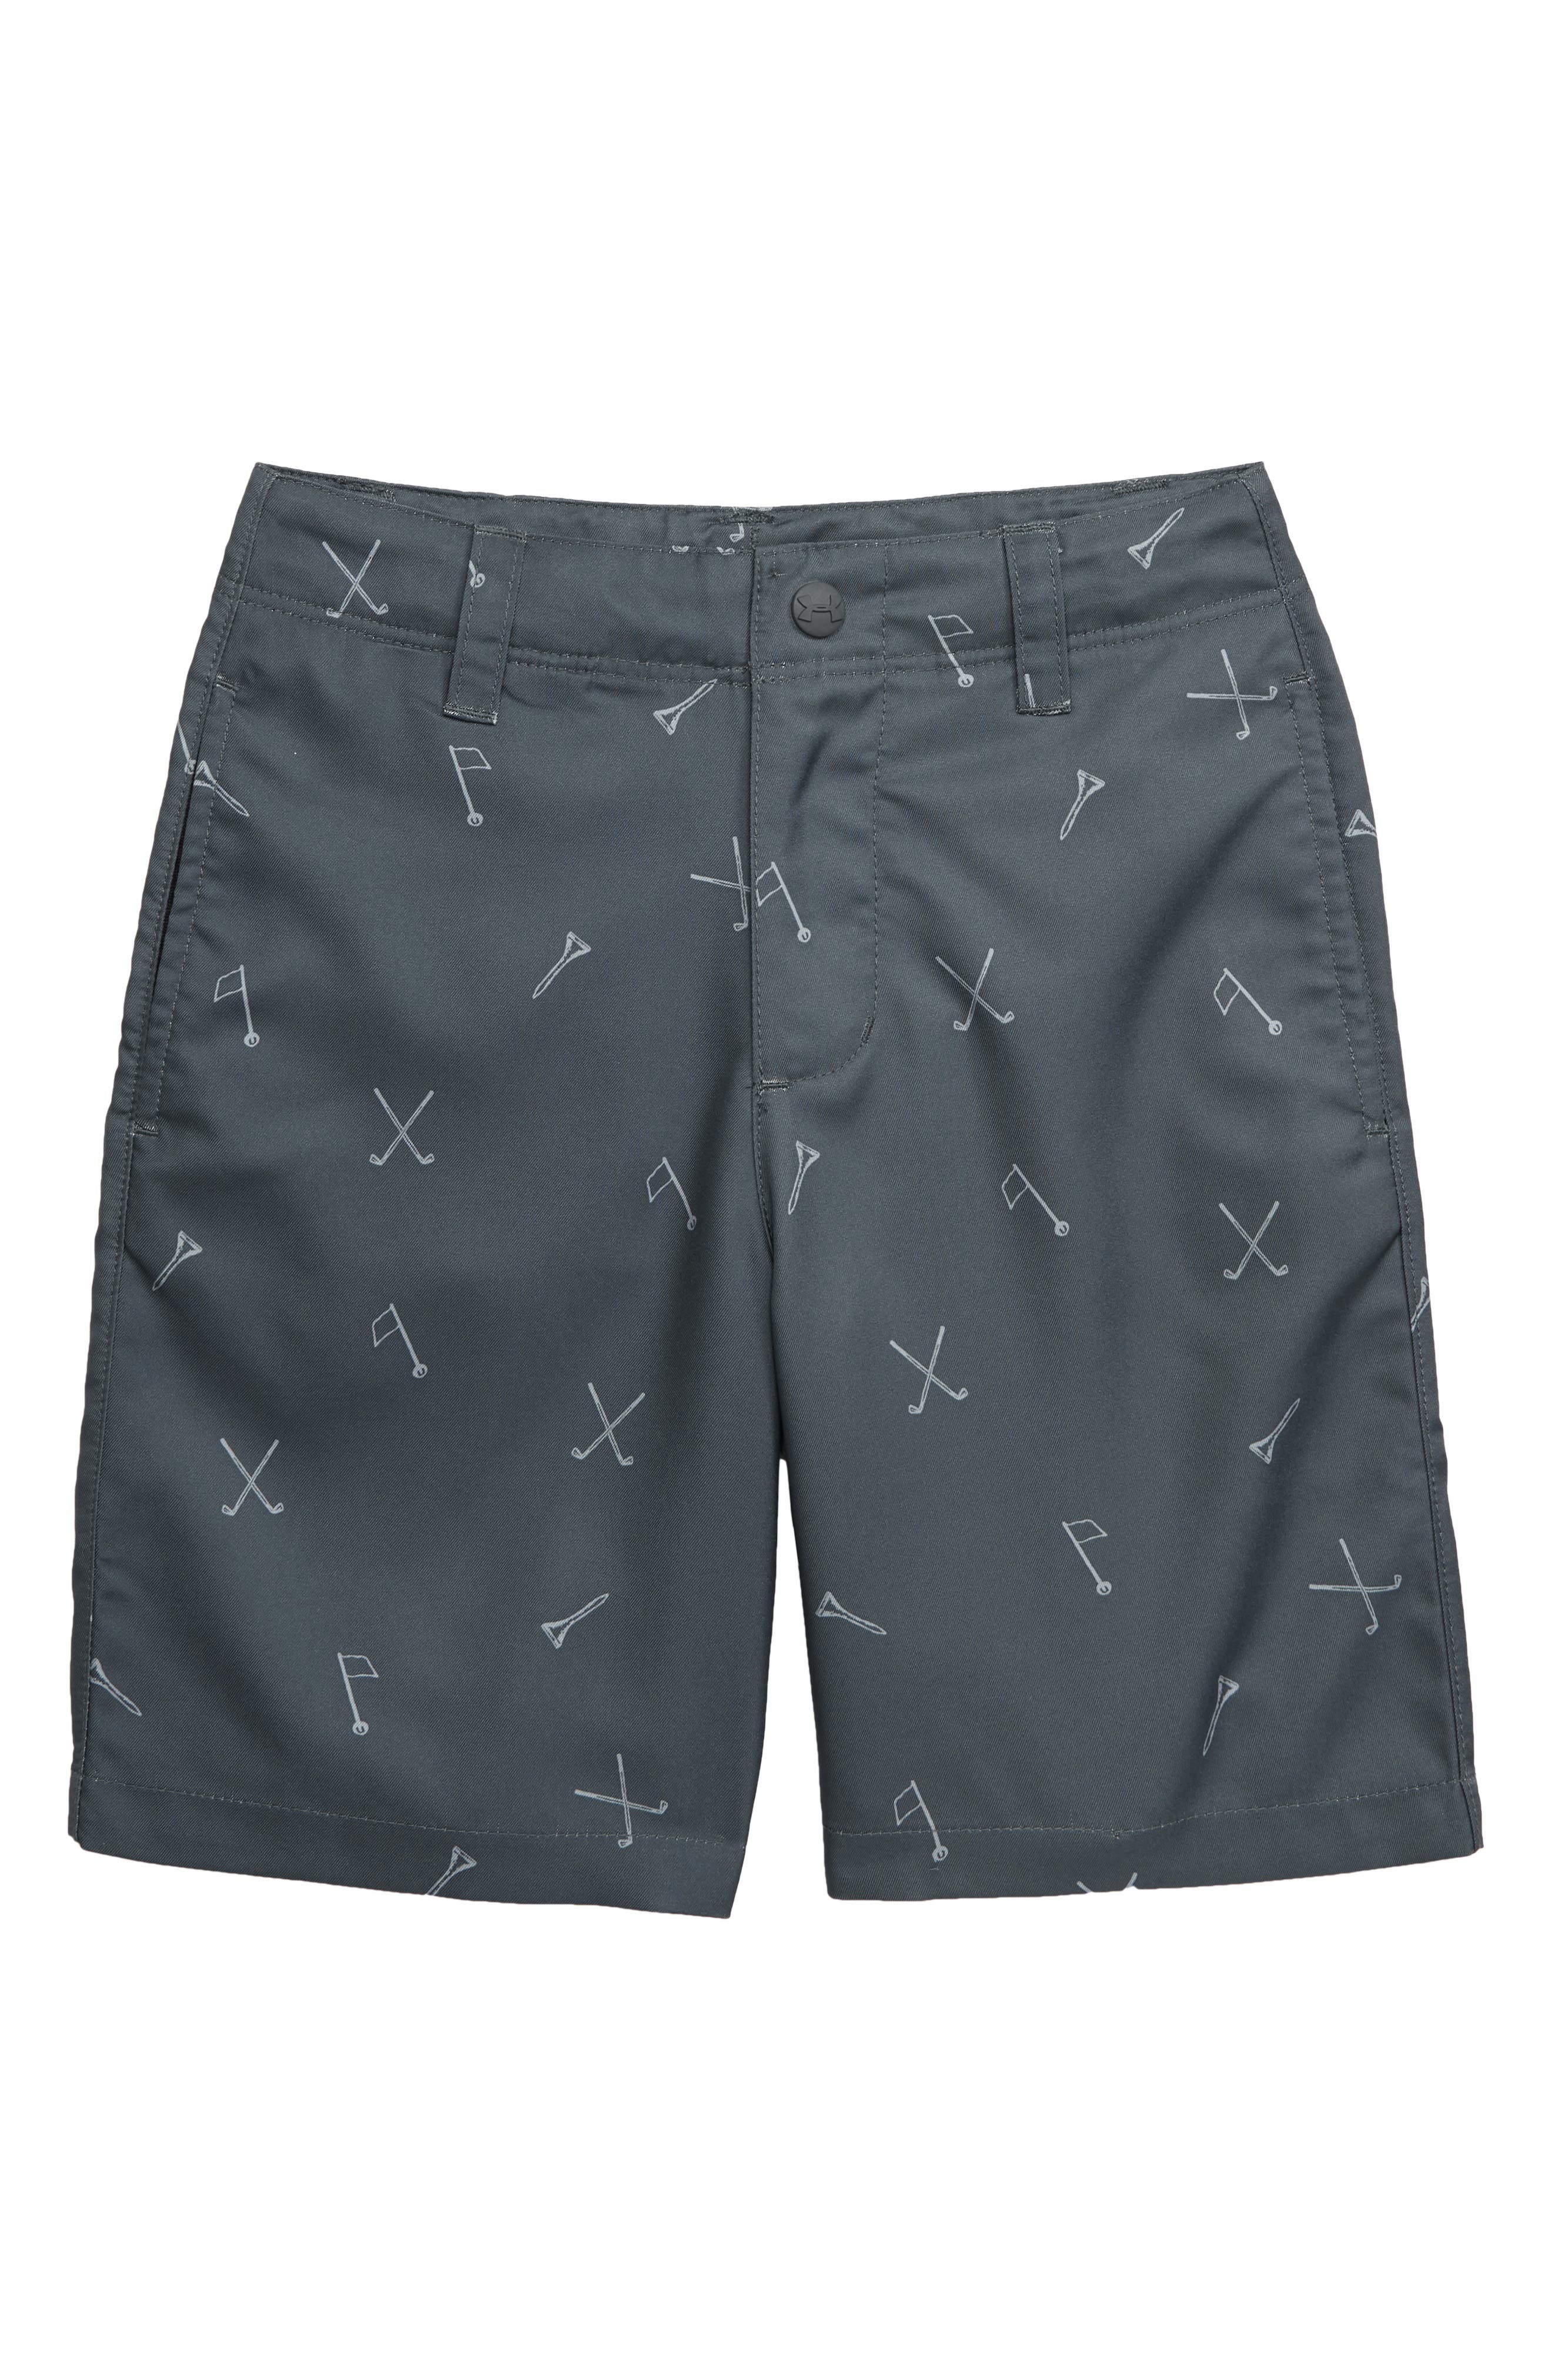 Golf Shorts (Toddler Boys \u0026 Little Boys 